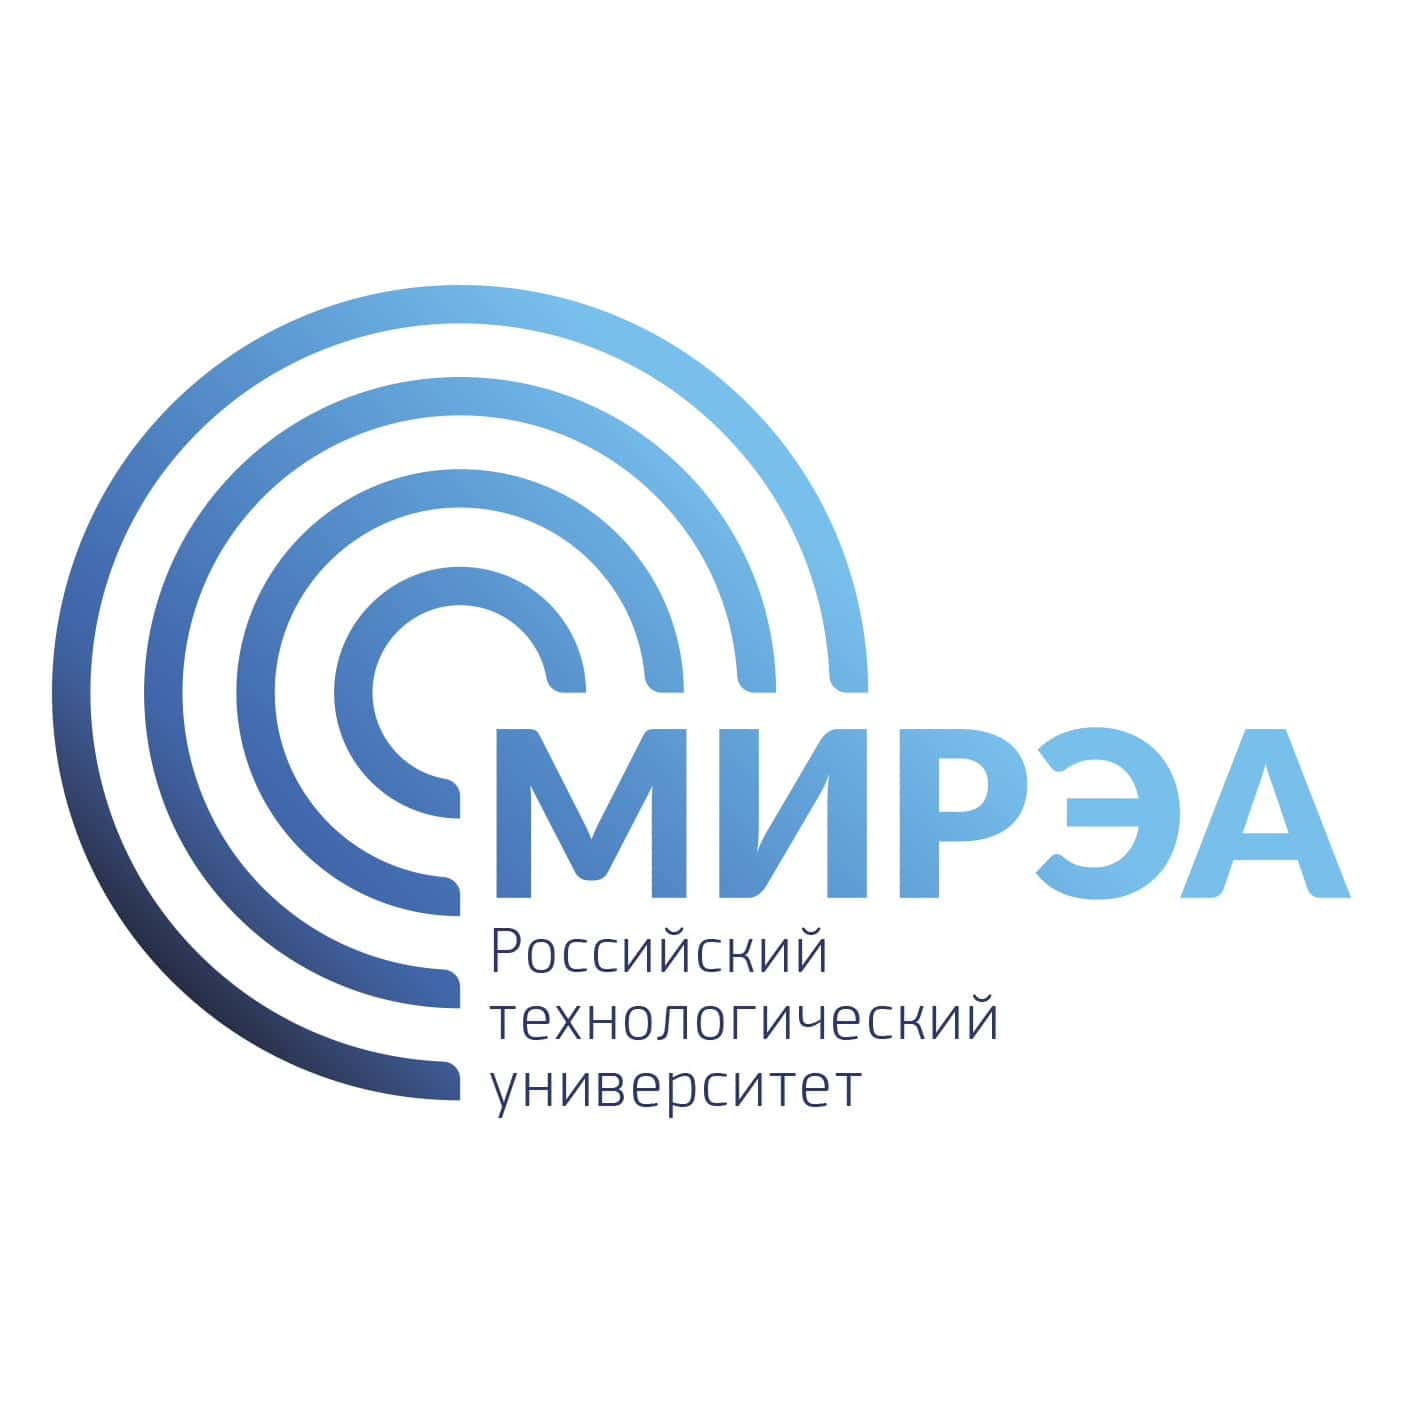  Russian Technological University logo